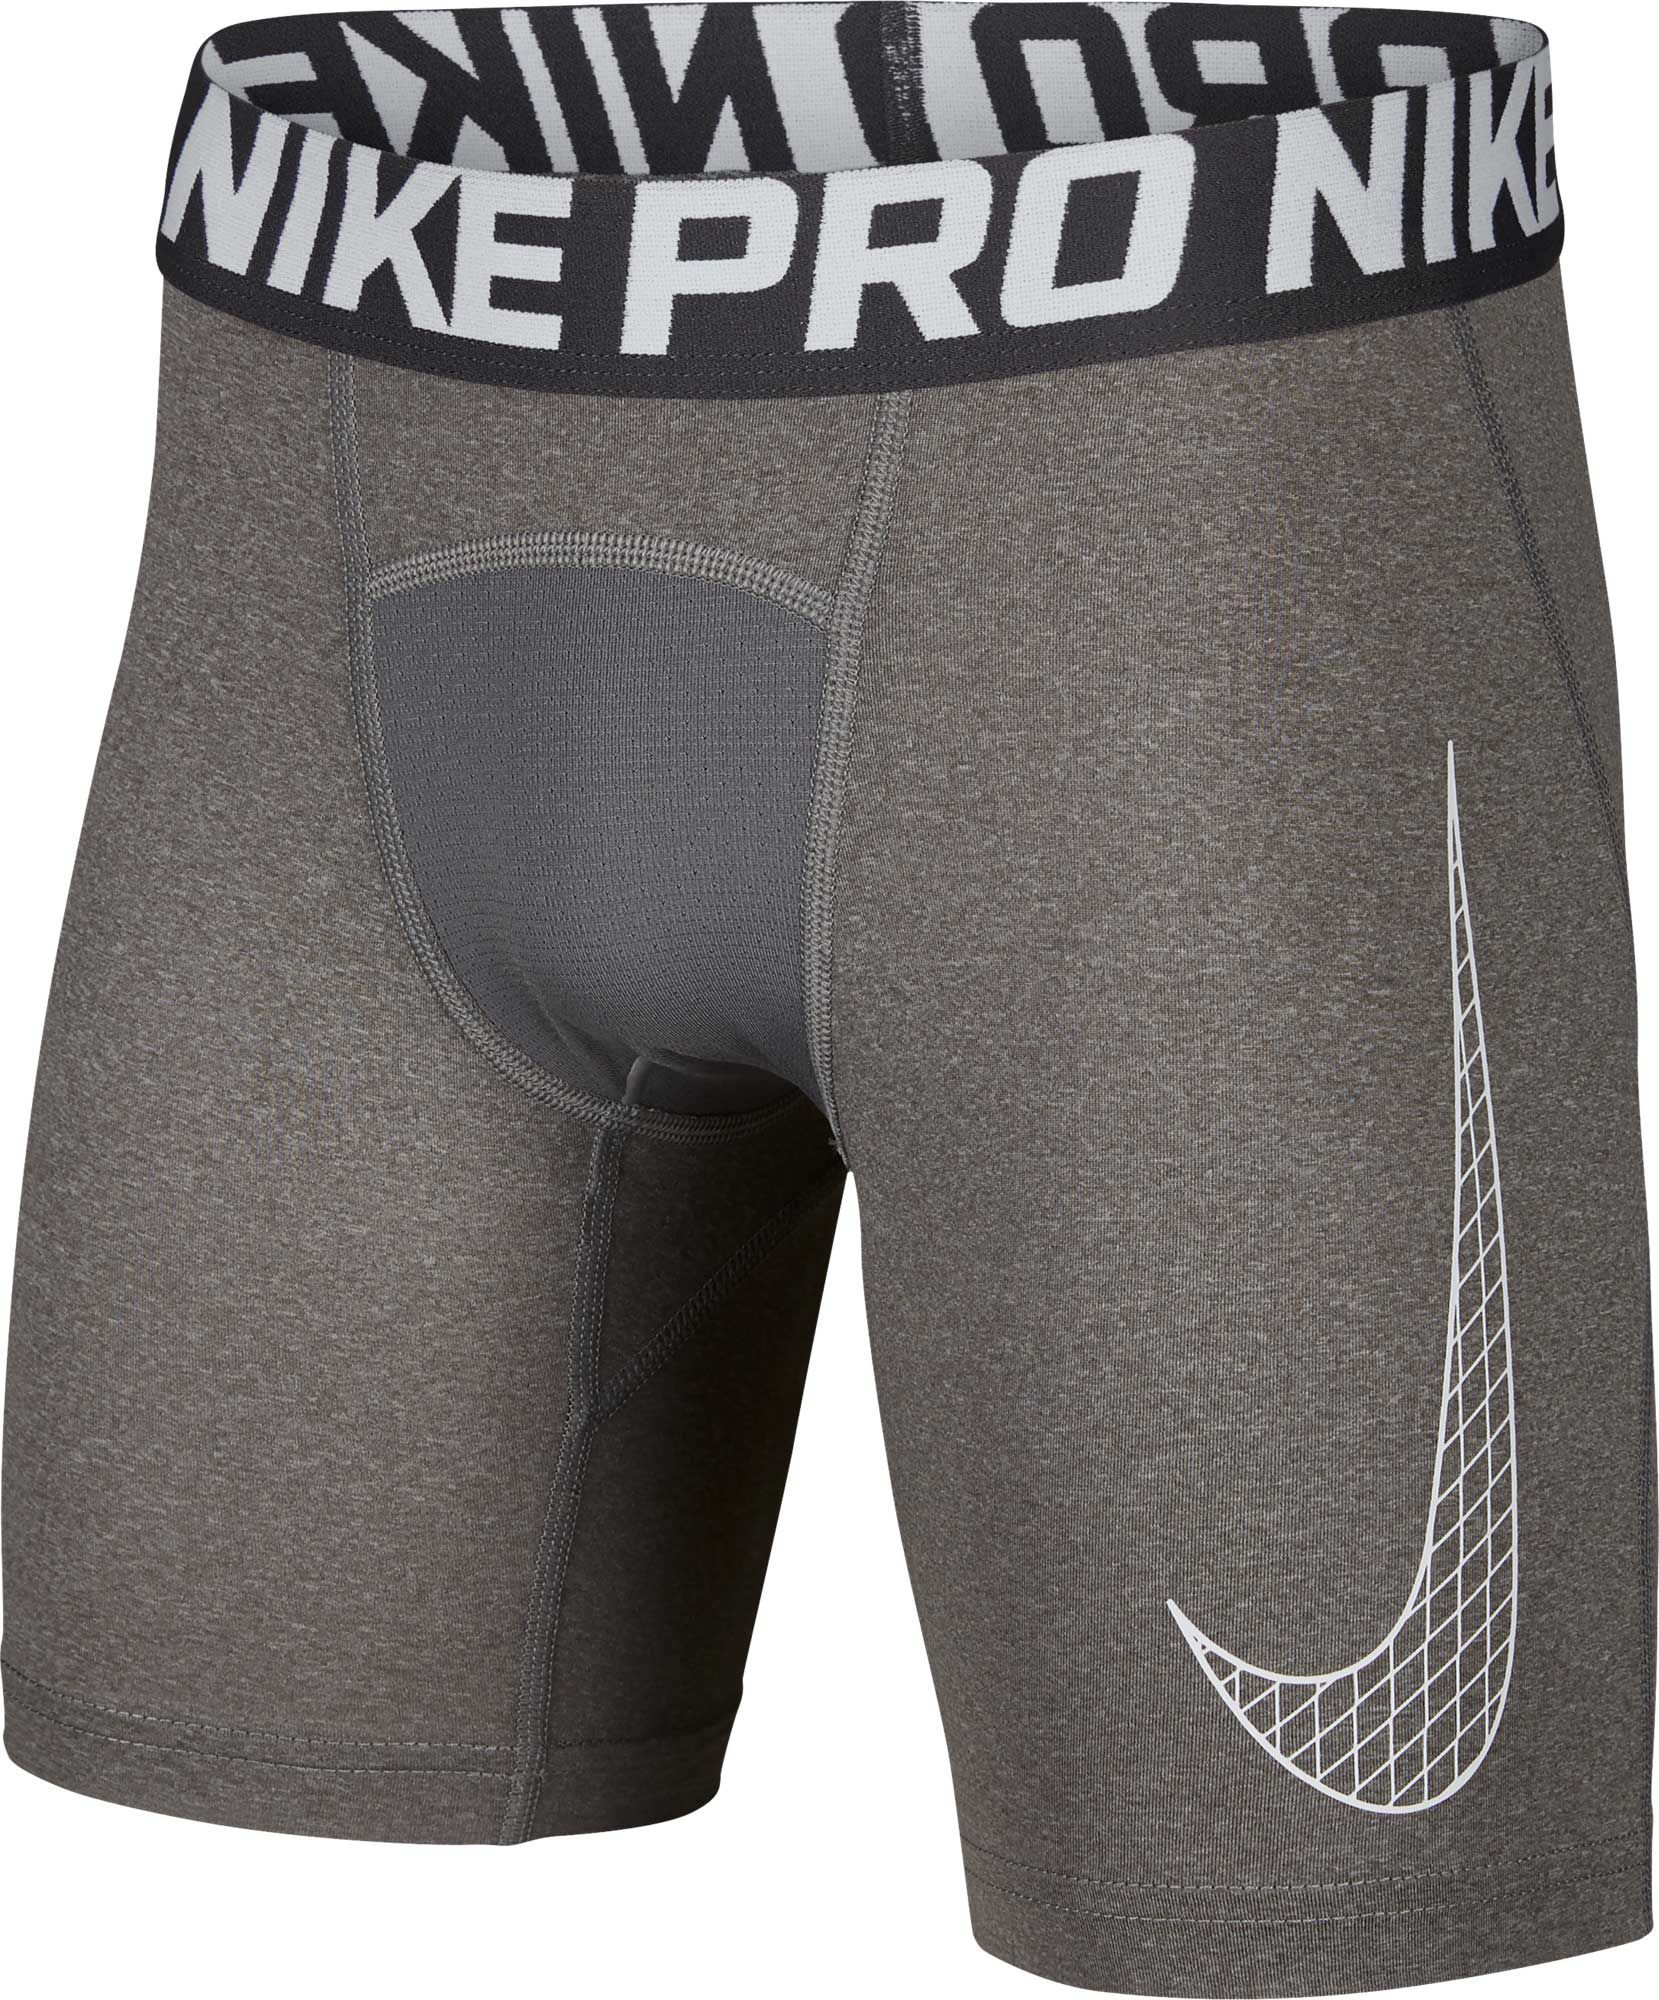 nike pro fit shorts